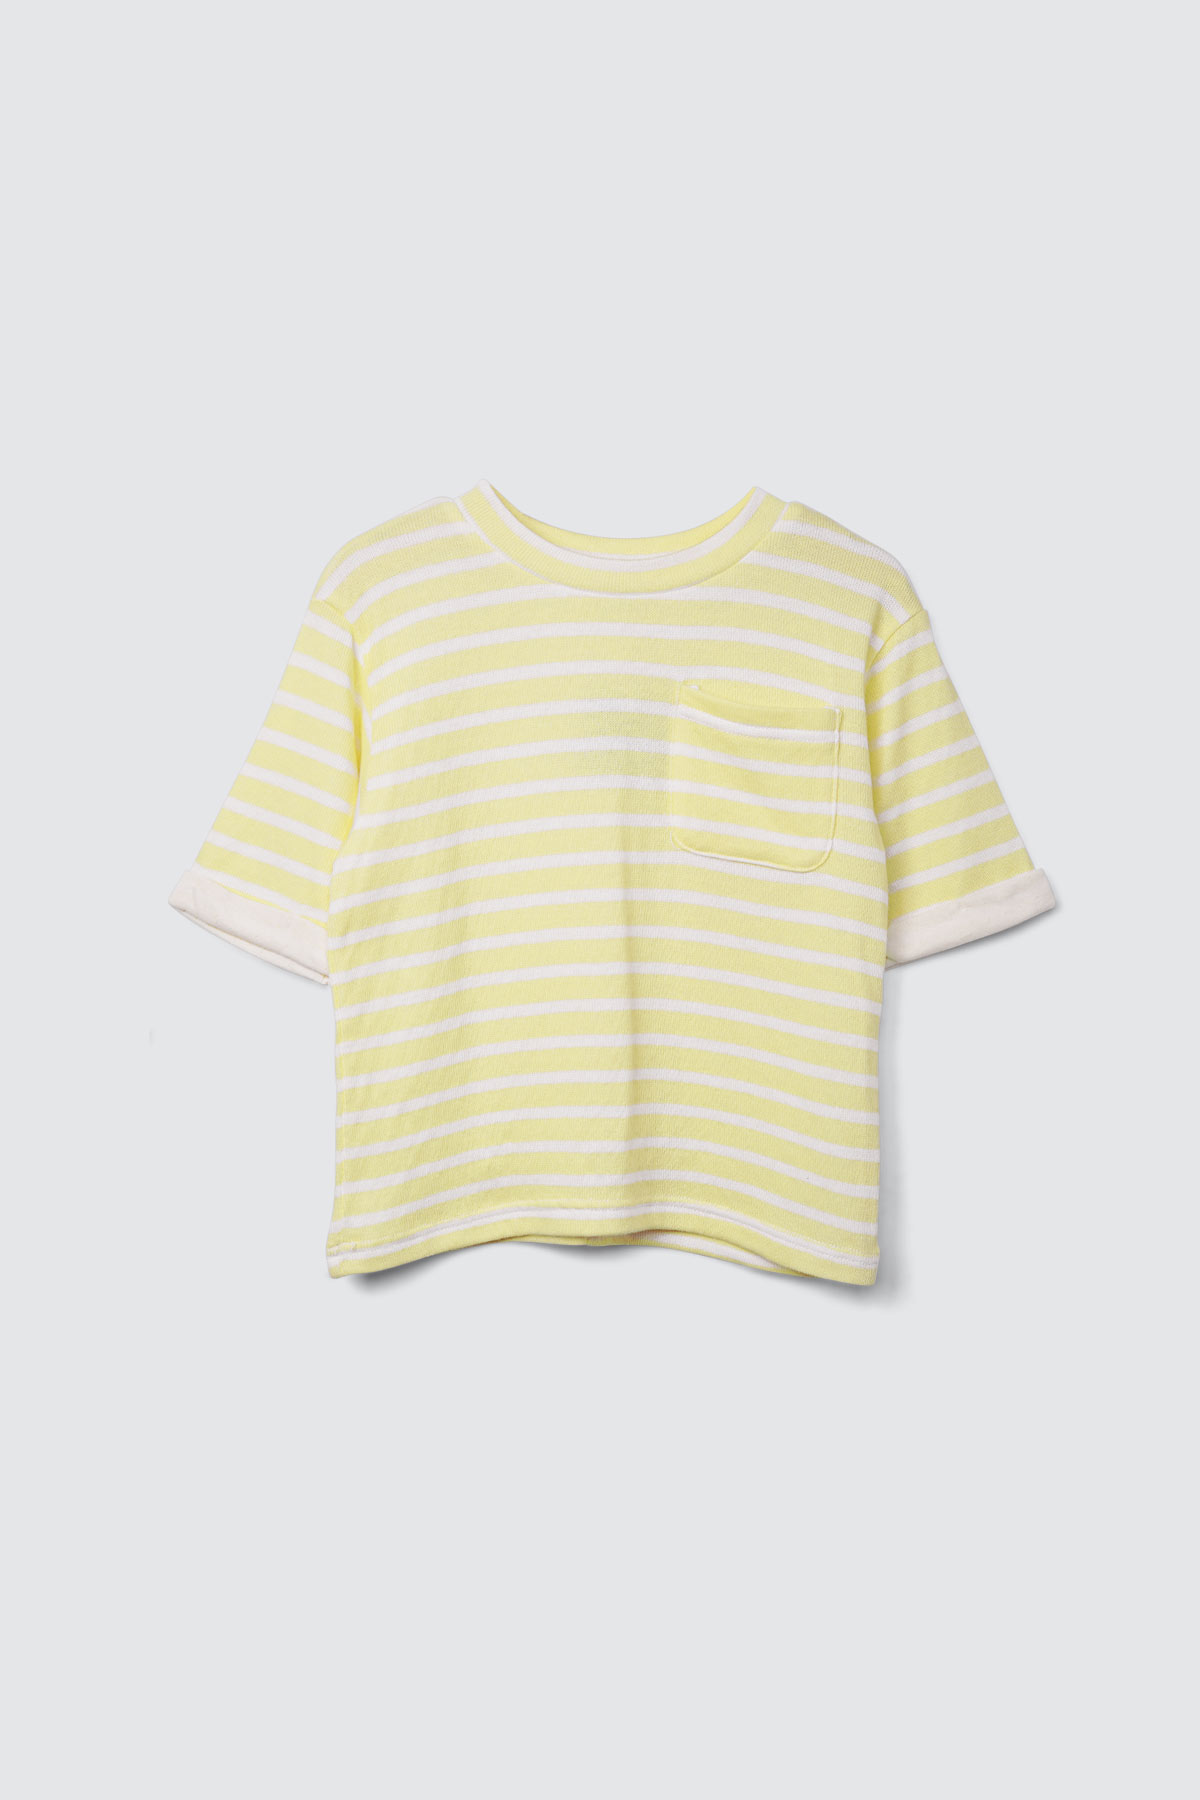 Sandy Top Yellow Stripe - Kiddiposh | Official Kaos Anak Petite Sunday